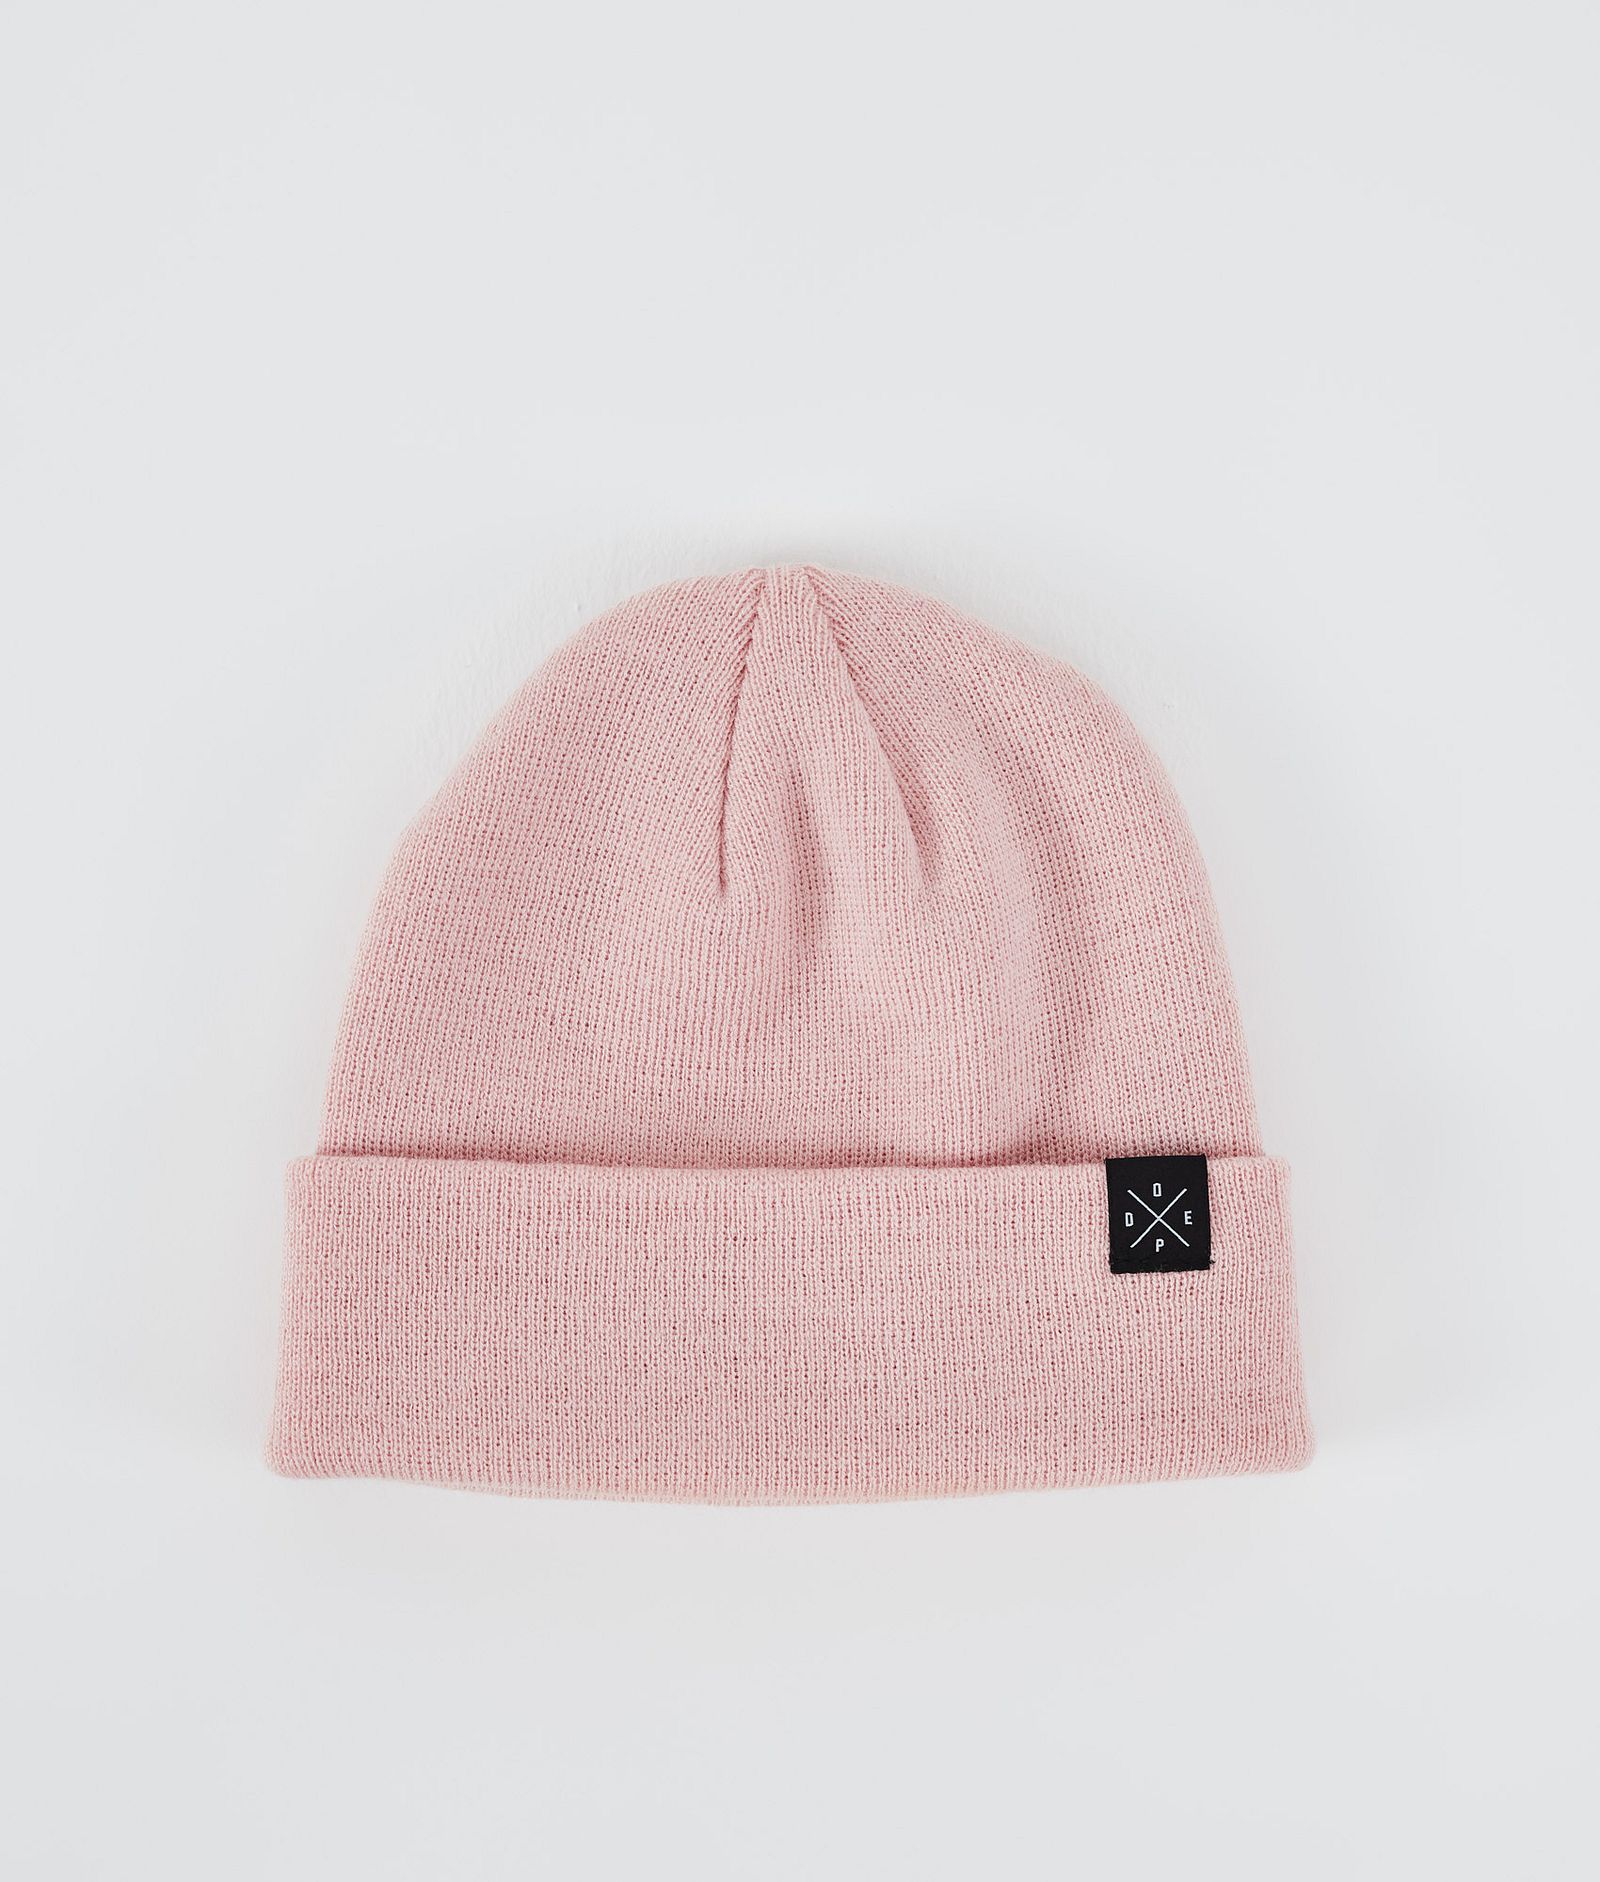 Solitude 2022 ビーニー帽 Soft Pink